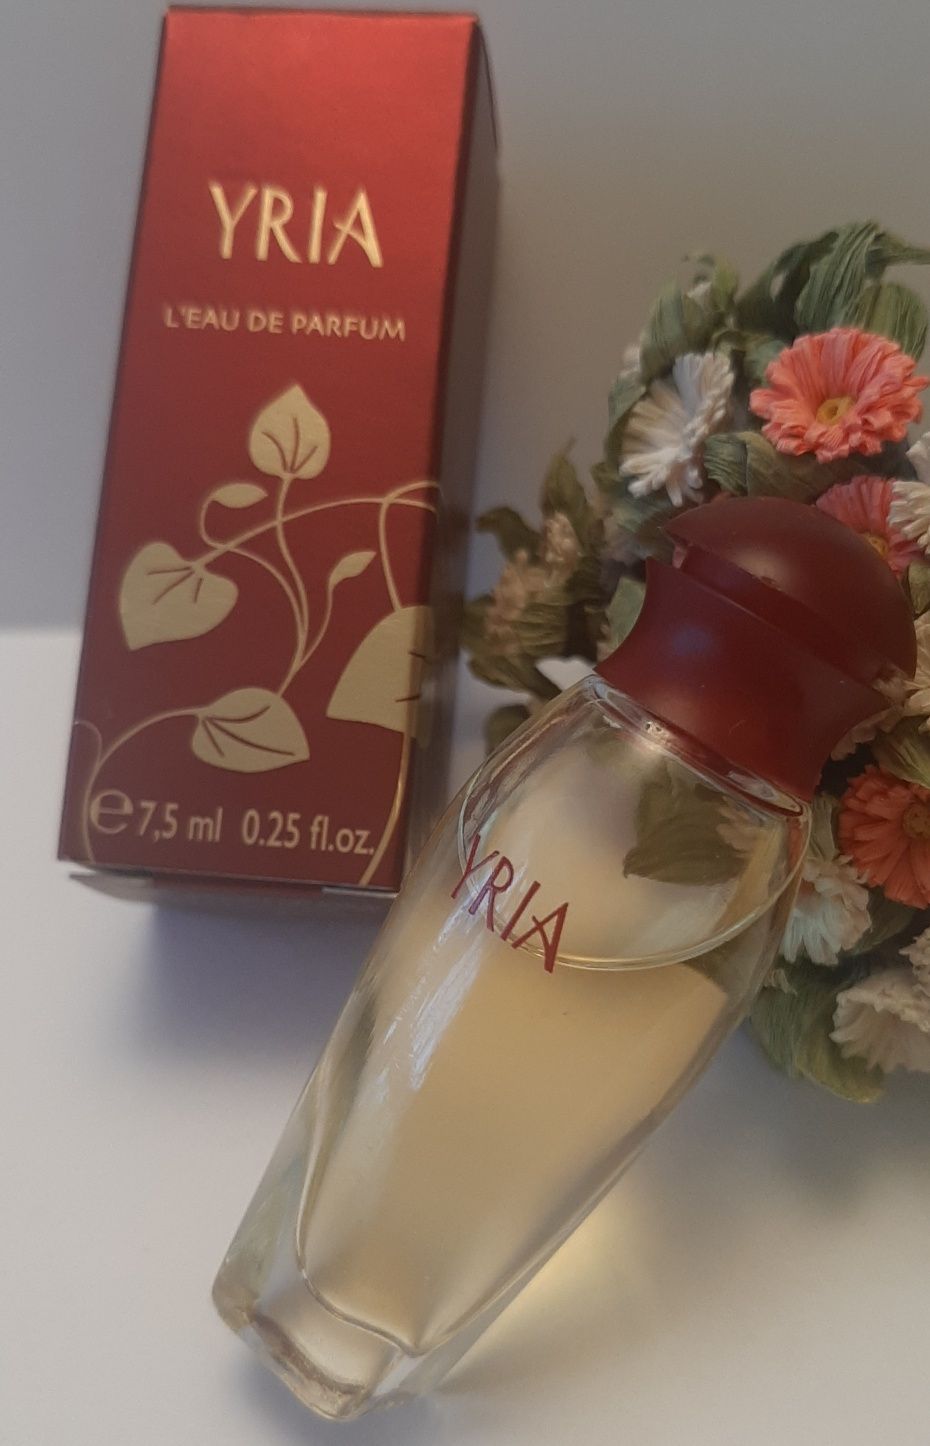 Yves Rocher Yria l'eau de parfum 7,5 ml, miniatura vintage